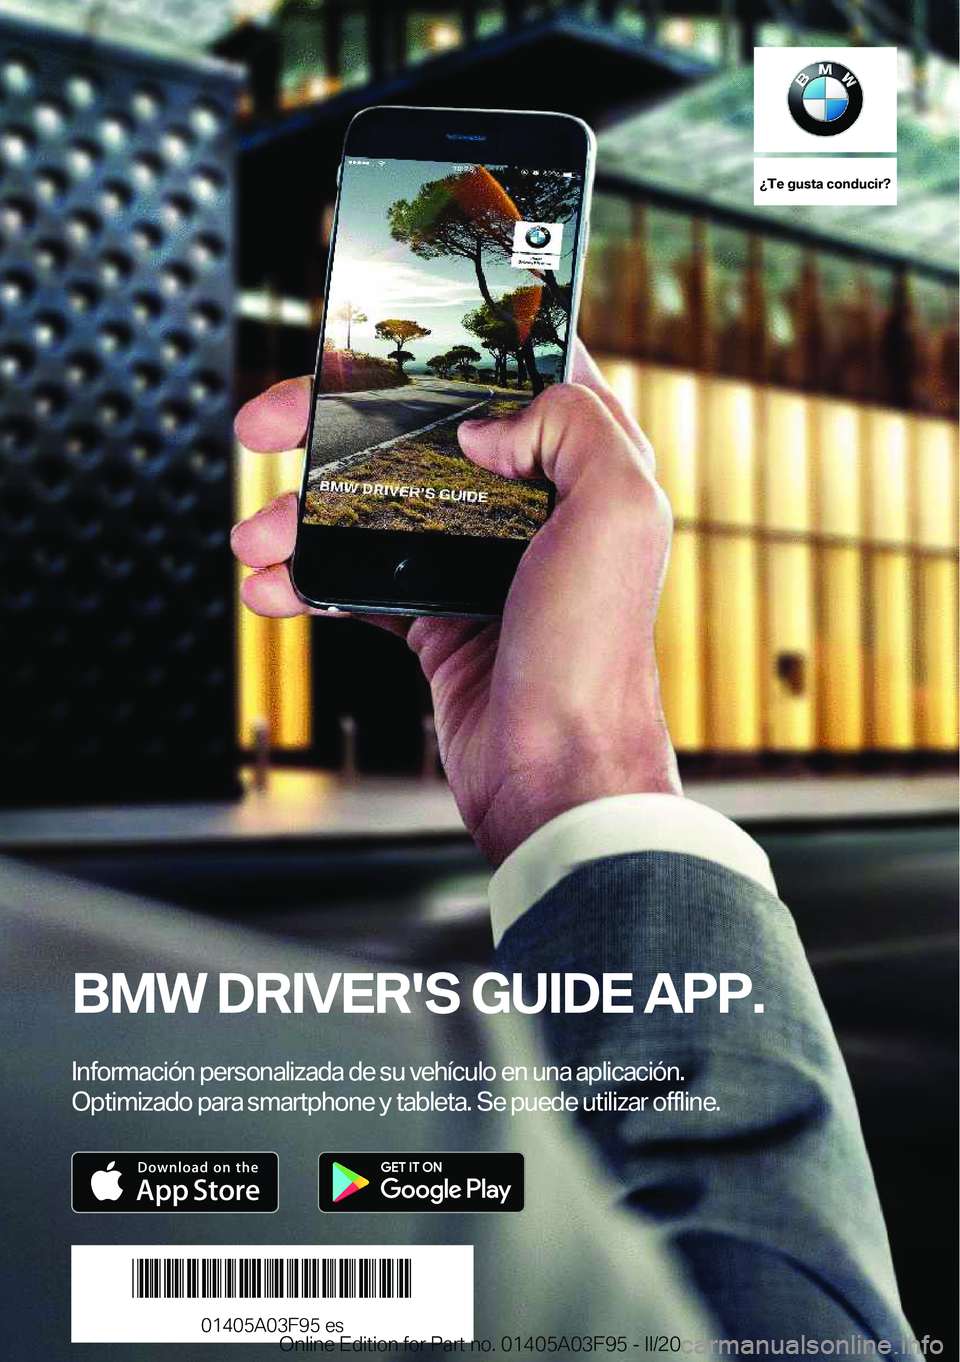 BMW 3 SERIES 2020  Manuales de Empleo (in Spanish) ��T�e��g�u�s�t�a��c�o�n�d�u�c�i�r� 
�B�M�W��D�R�I�V�E�R�'�S��G�U�I�D�E��A�P�P�.�*�n�f�o�r�m�a�c�i�